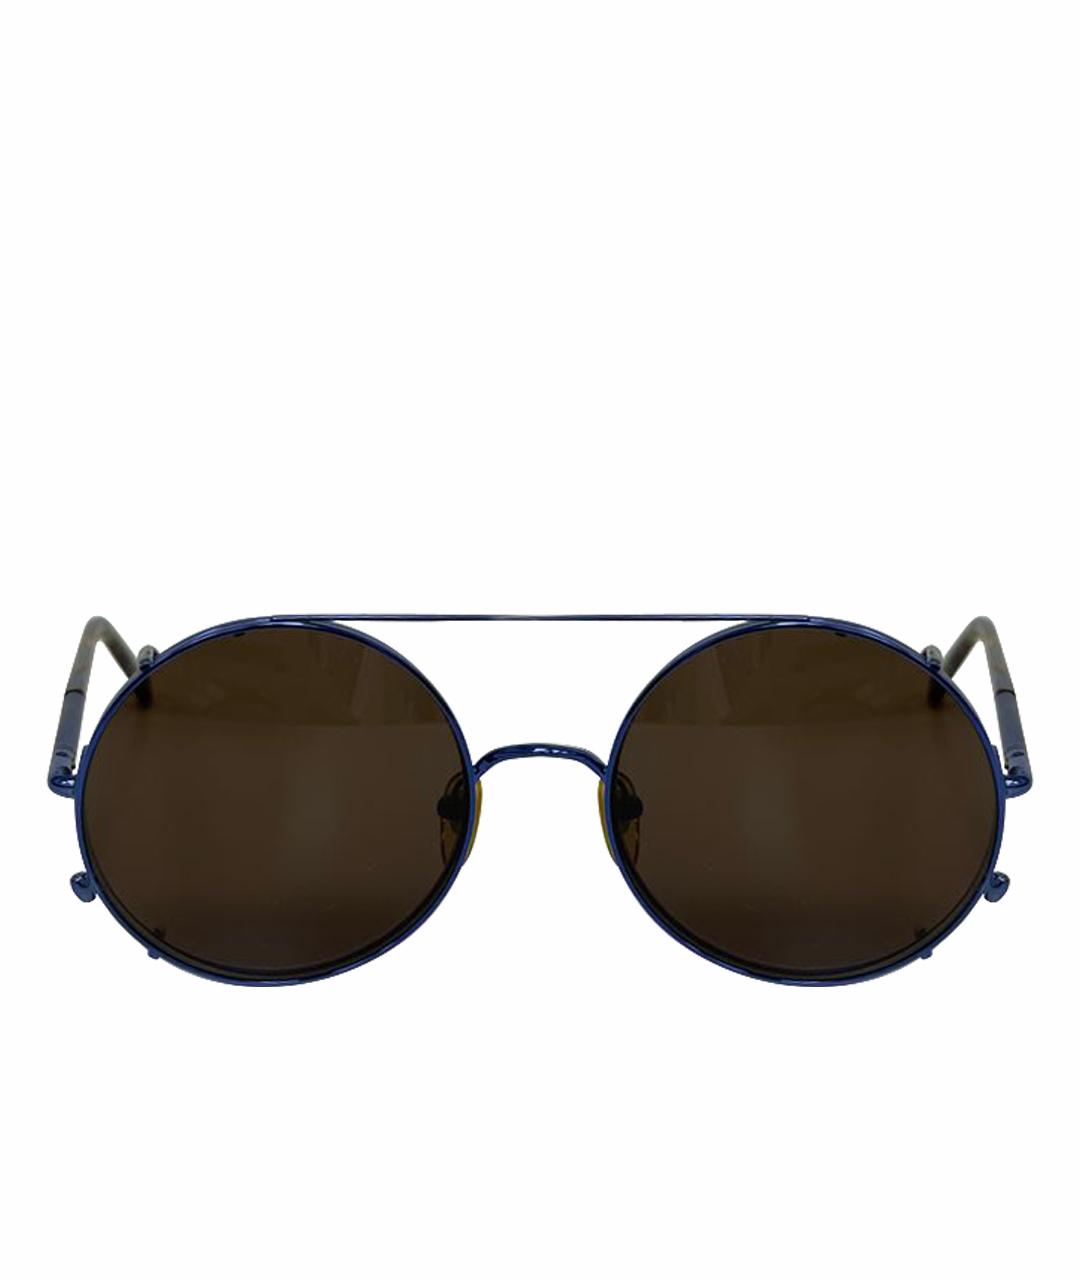 SUNDAY SOMEWHERE Темно-синие металлические солнцезащитные очки, фото 1